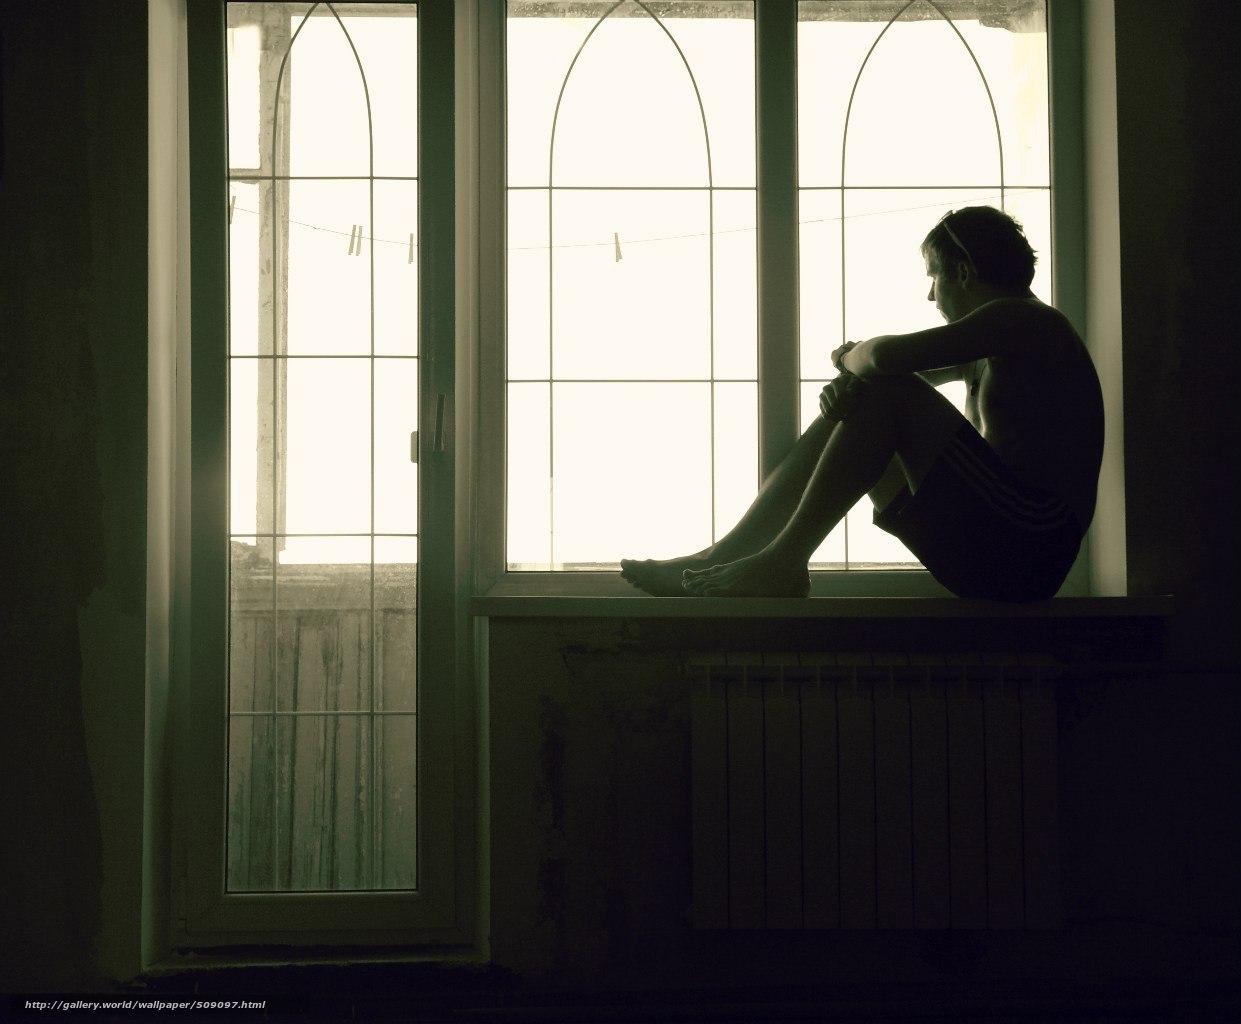 Одиноко без мужа. Одинокий парень. Одно окно. Мужчина грустит у окна. Одиночество в доме.